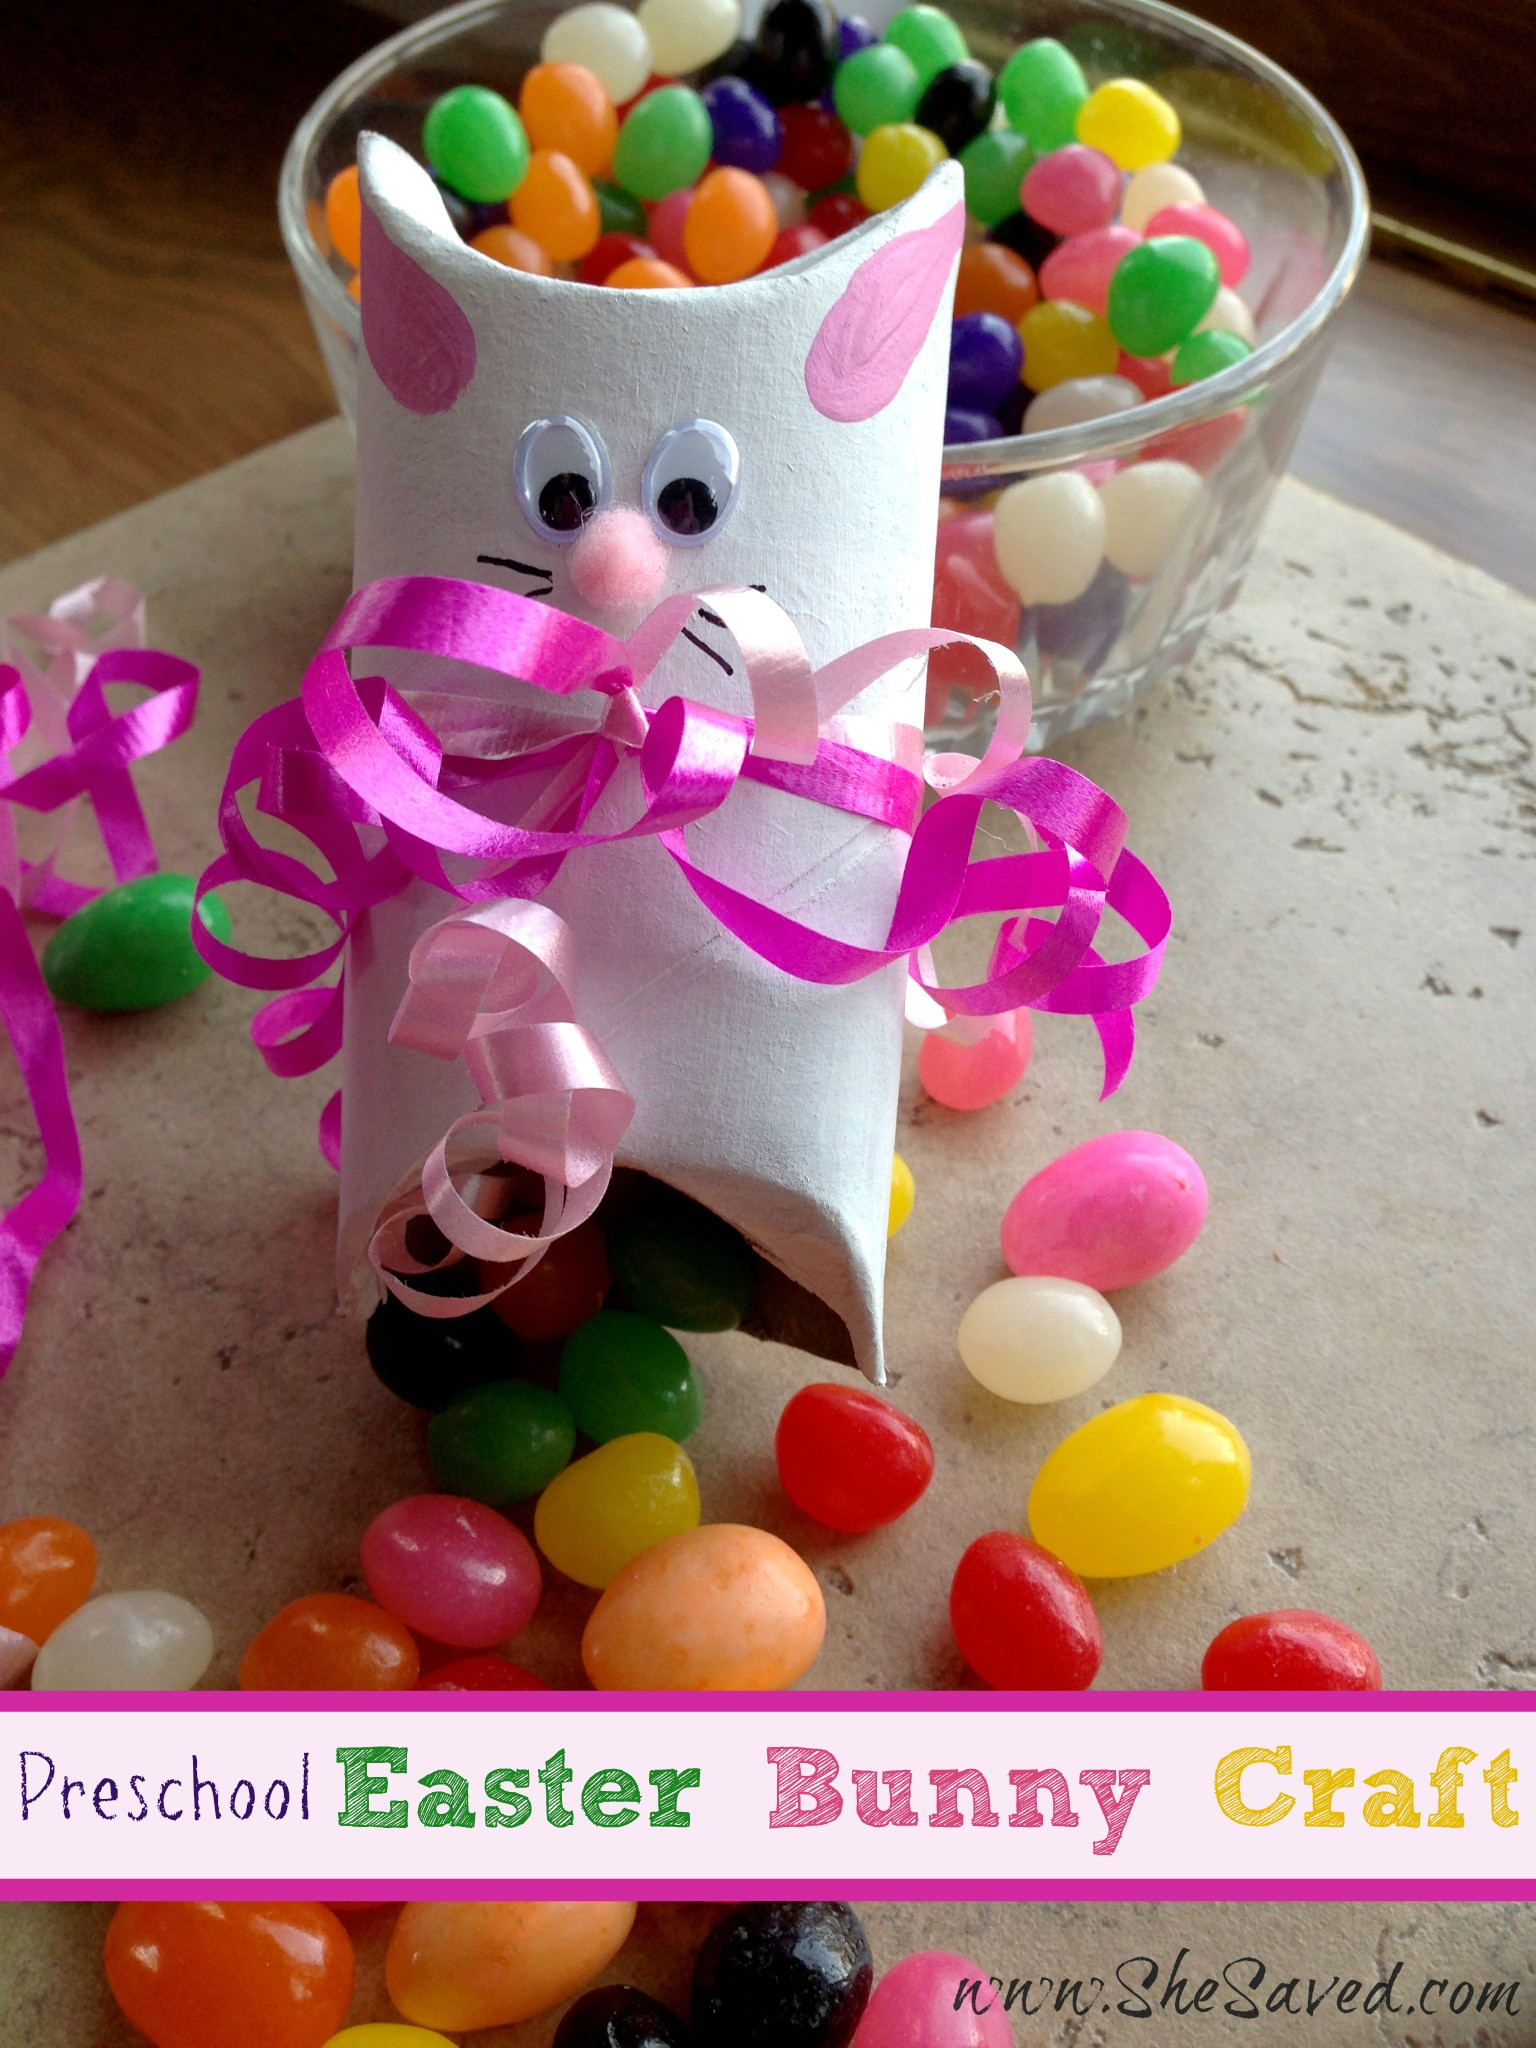 Kindergarten Easter Party Ideas
 Preschool Easter Bunny Crafts SheSaved